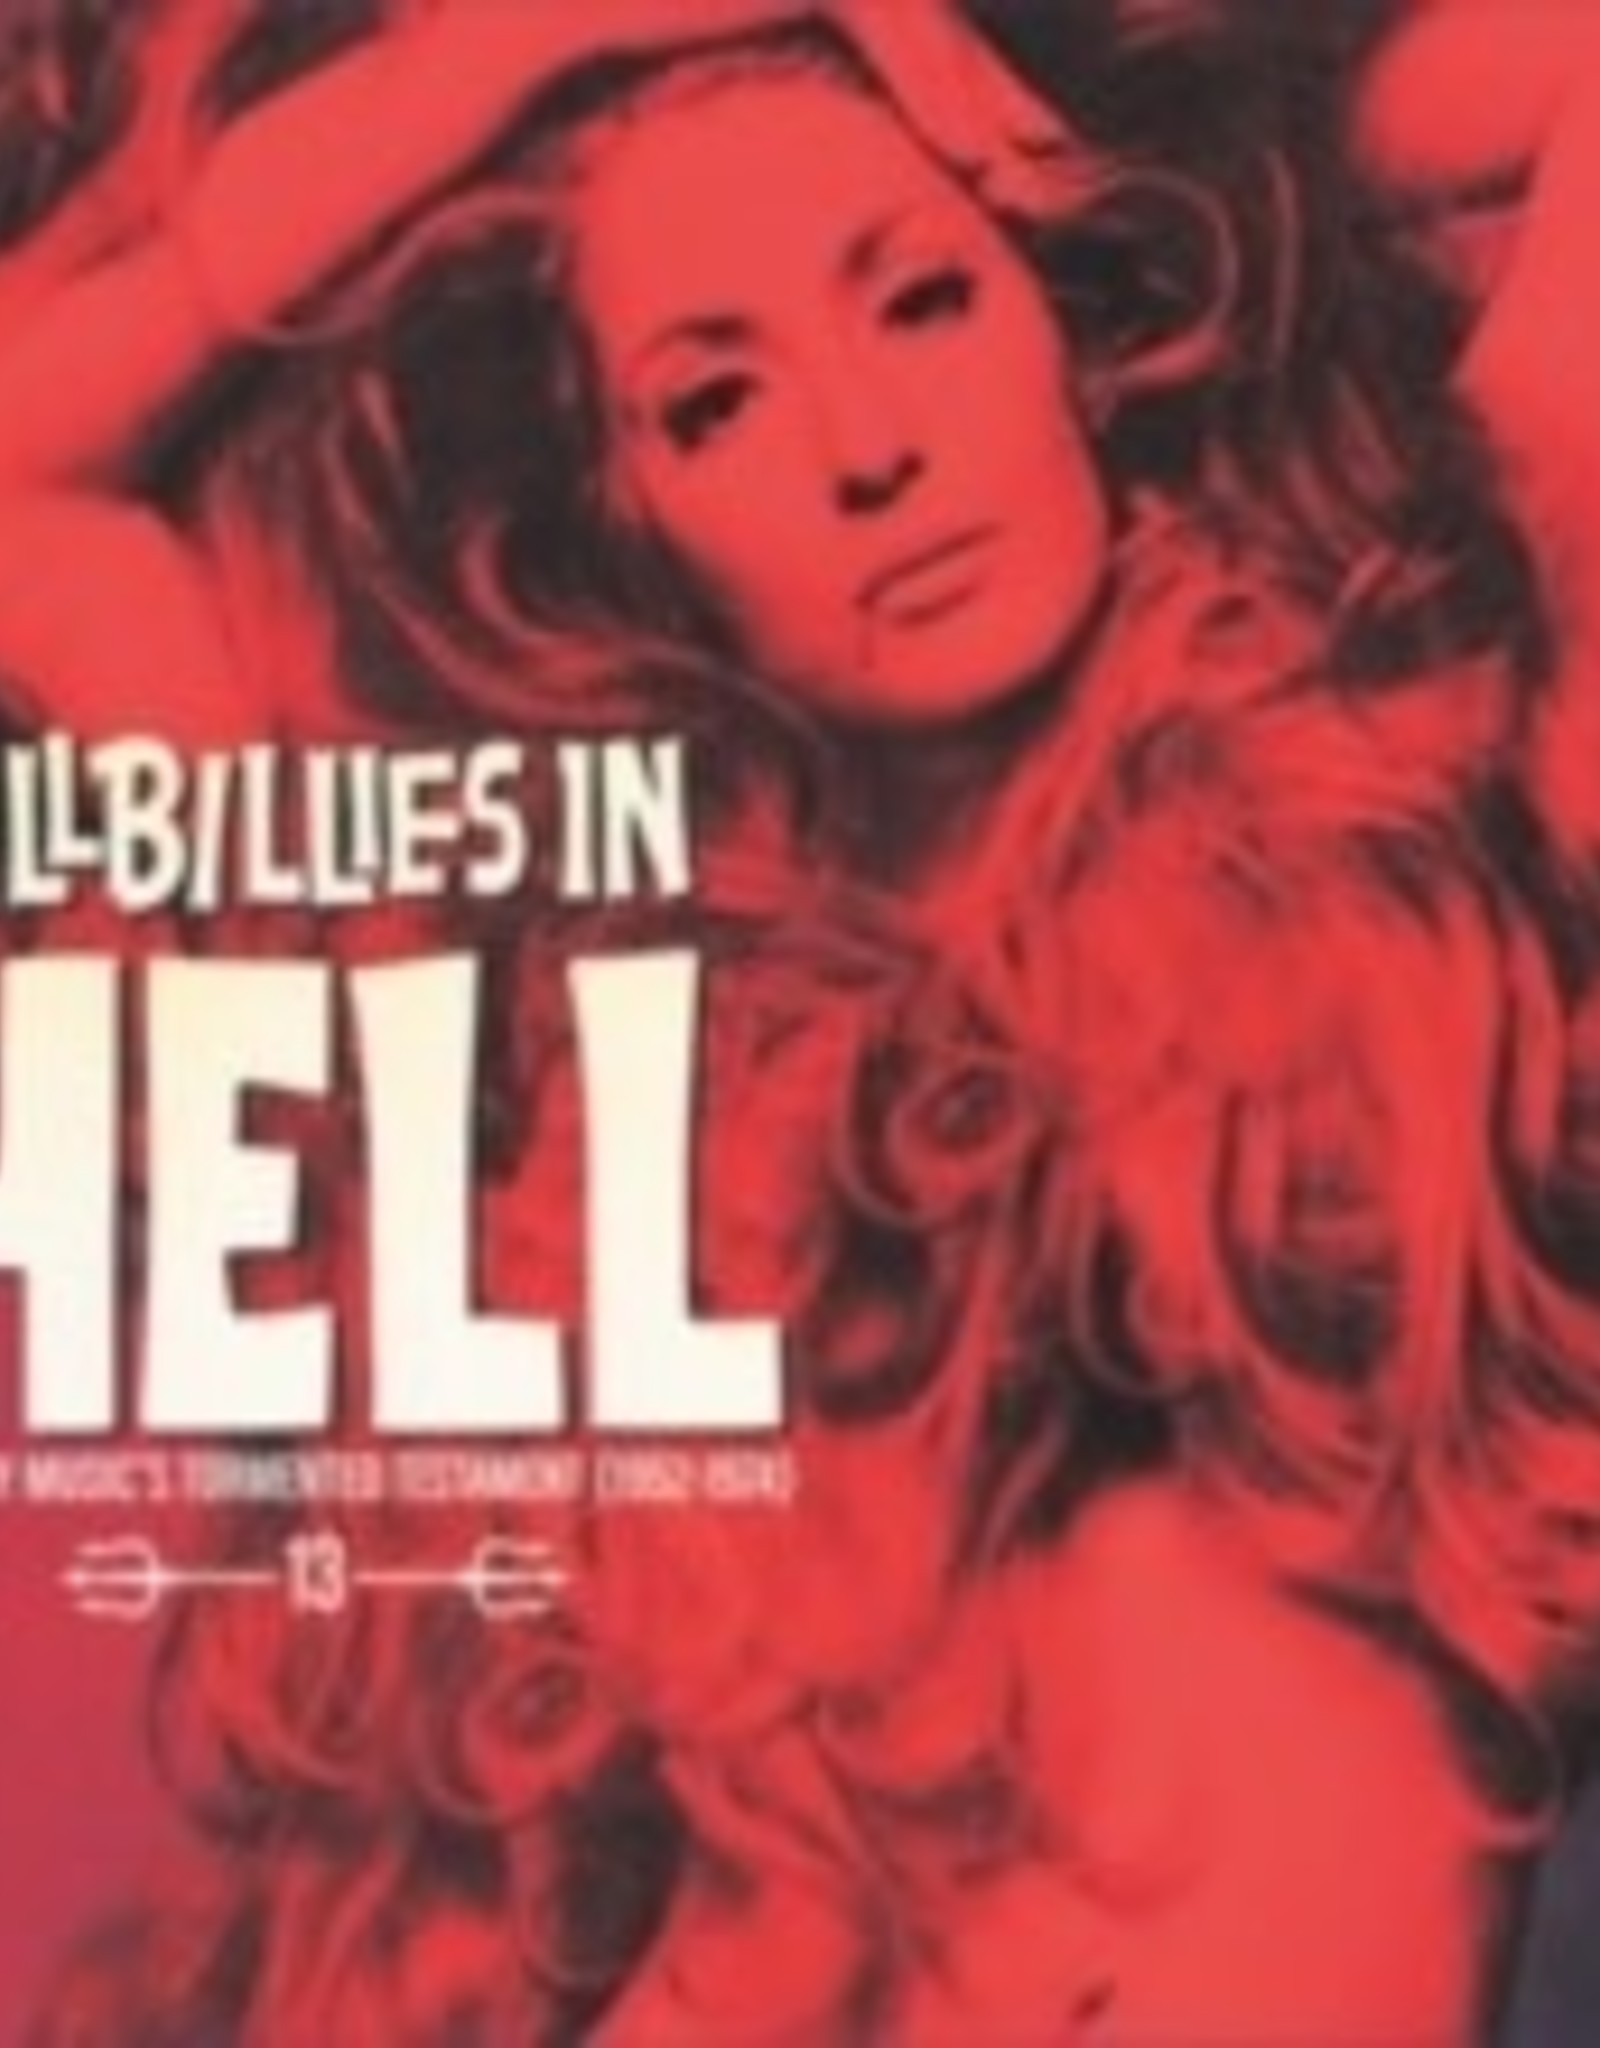 Hillbillies in Hell XIII